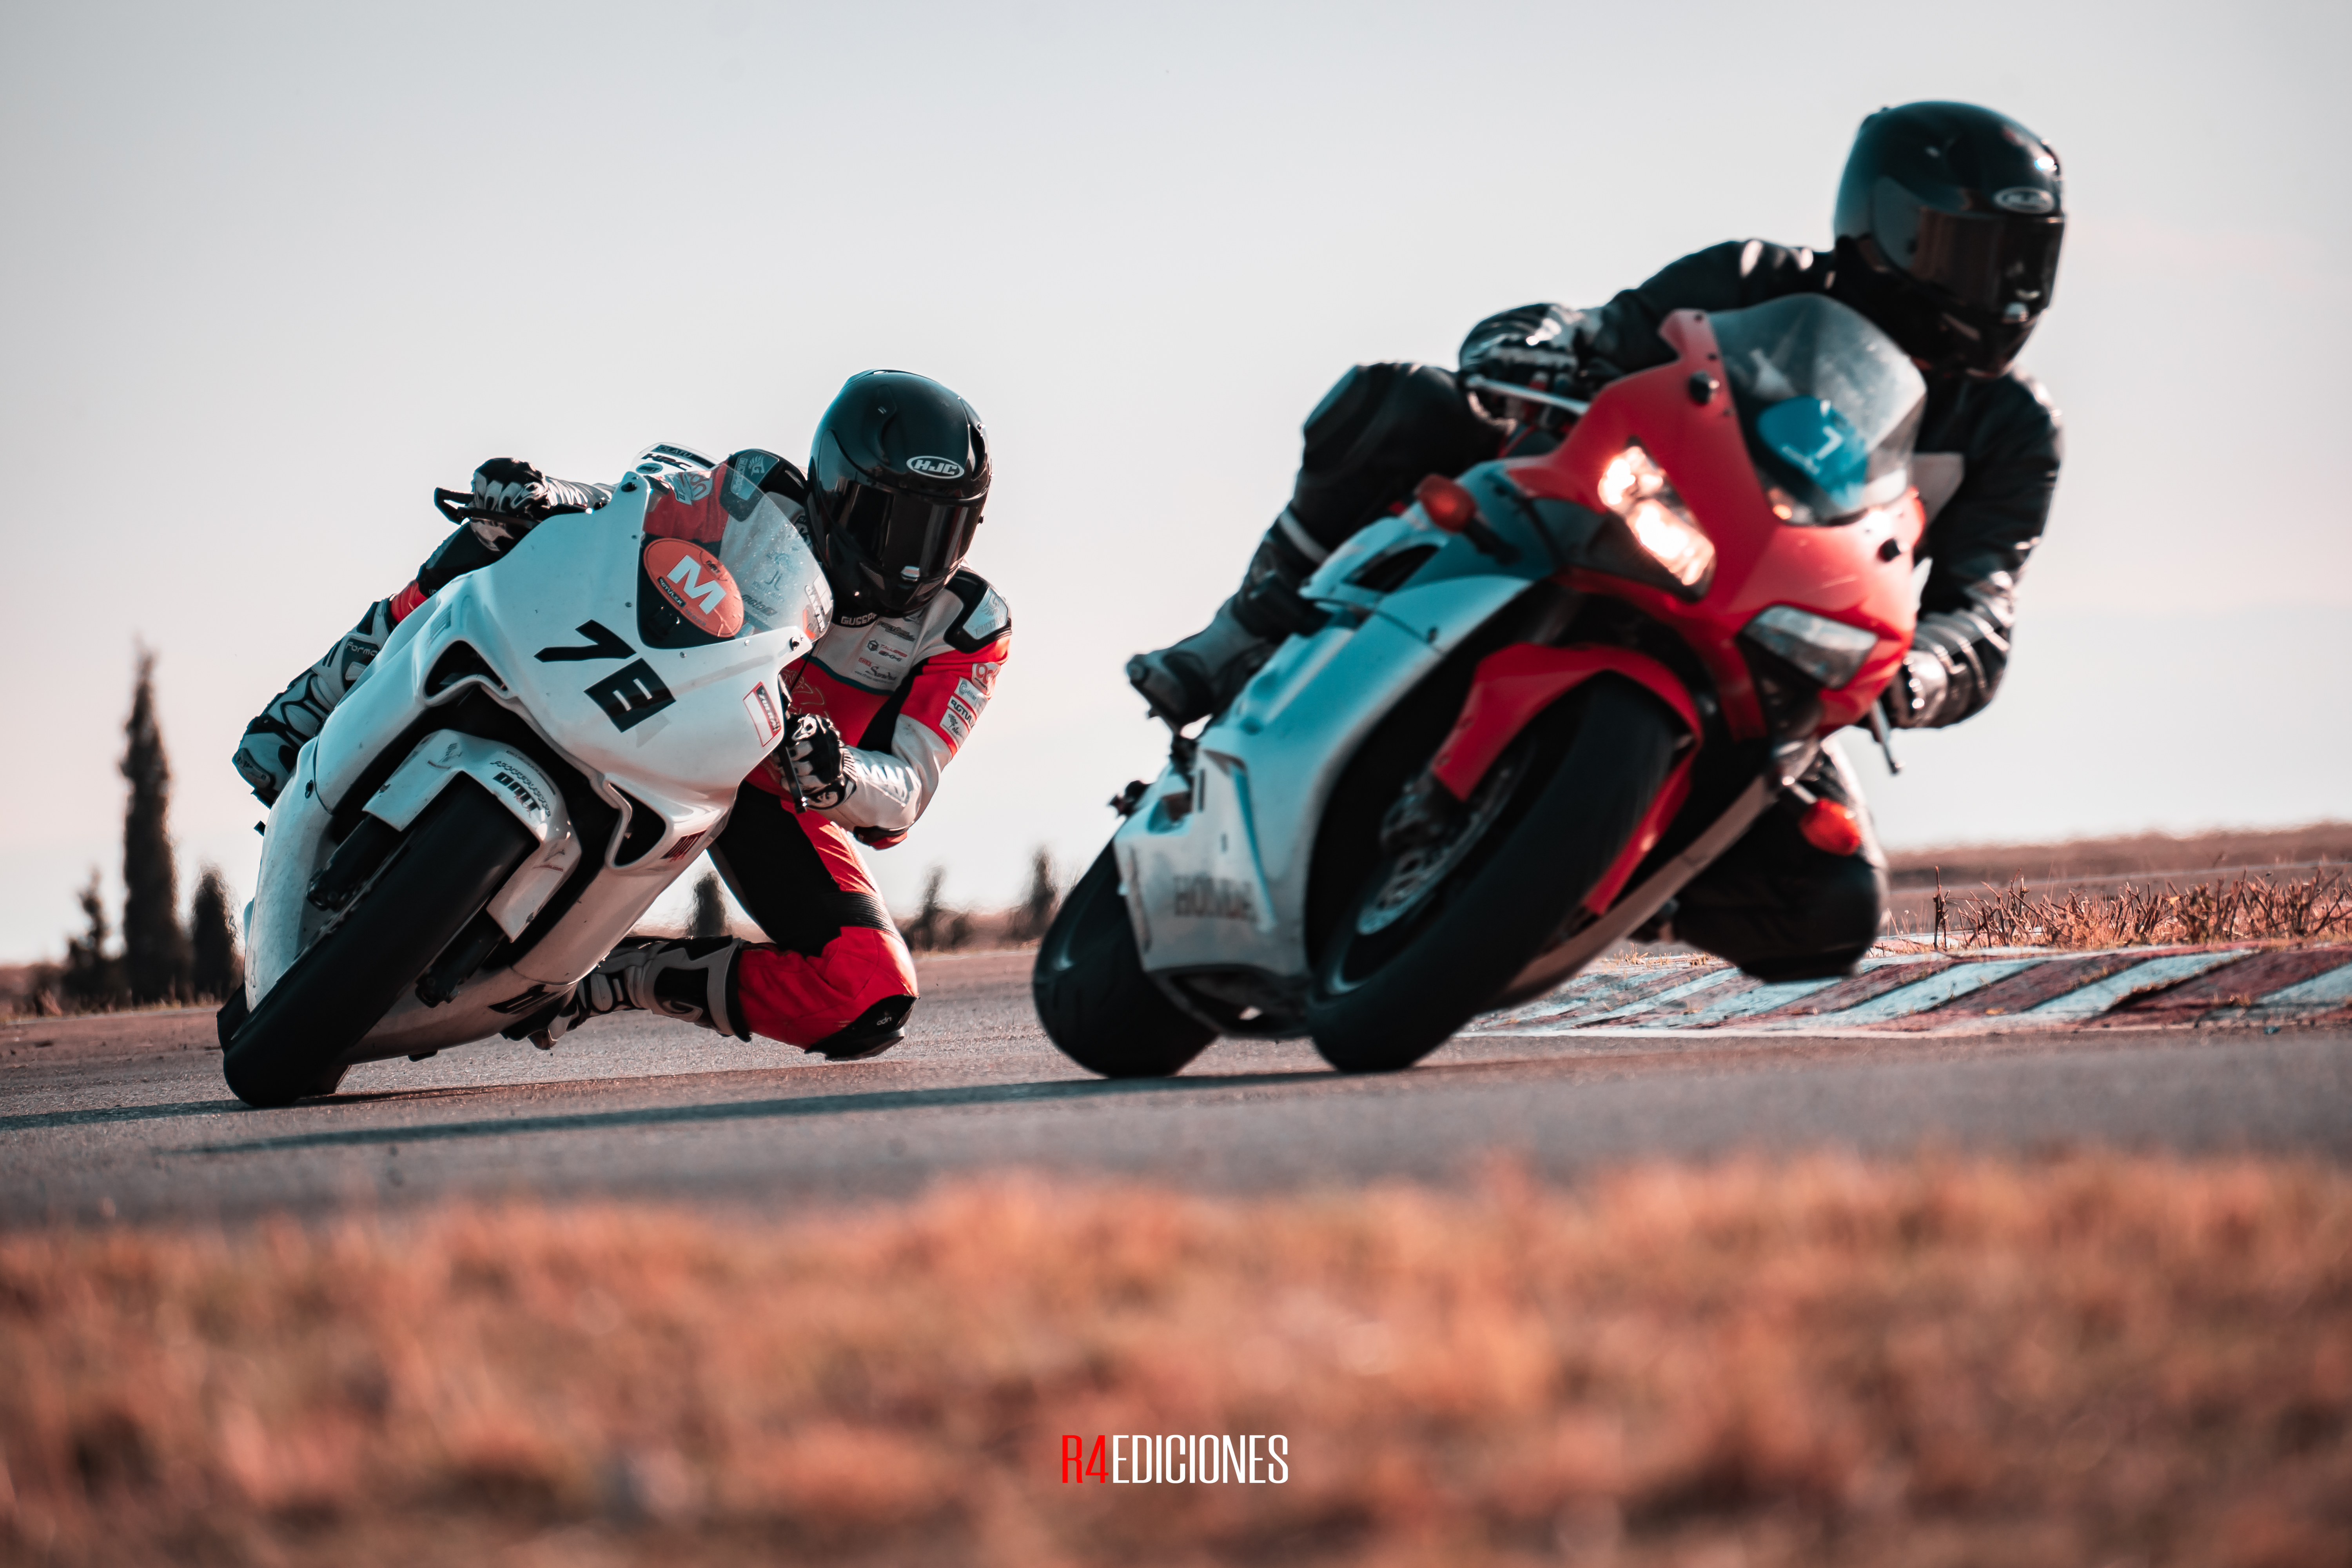 Vehicles Motorcycle 4k Ultra HD Wallpaper by r4edic